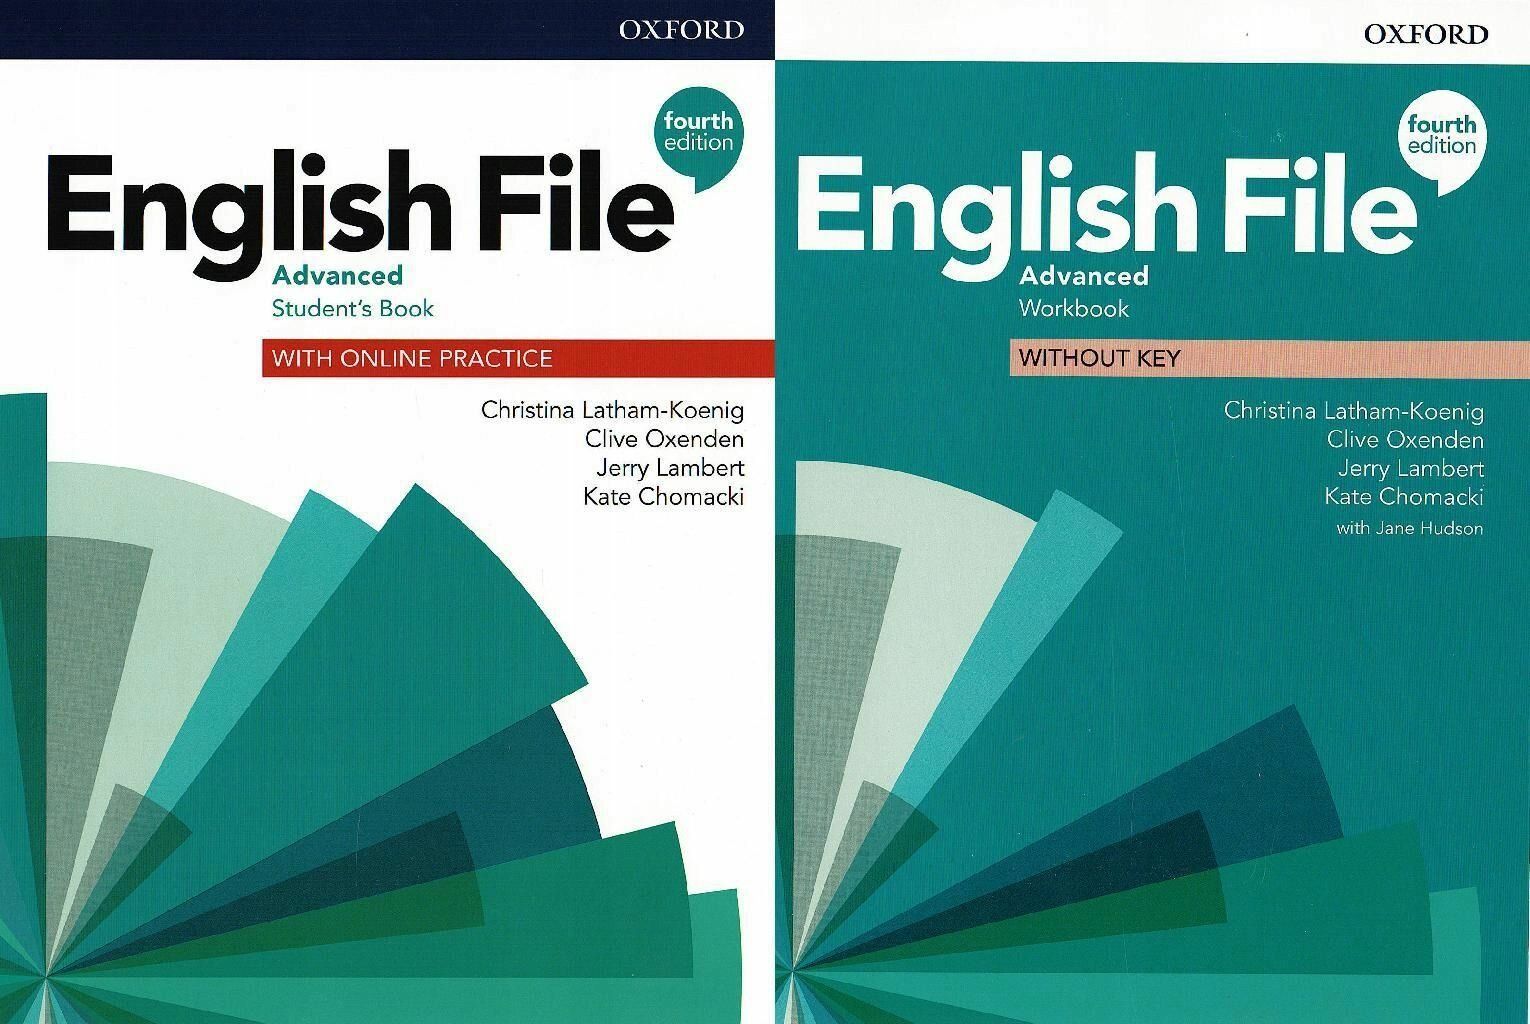 Учебник new file. English file pre Intermediate 4th Edition. English file Advanced 4th Edition. English file Elementary 4th Edition уровень. Оксфорд 4 издание Intermediate.